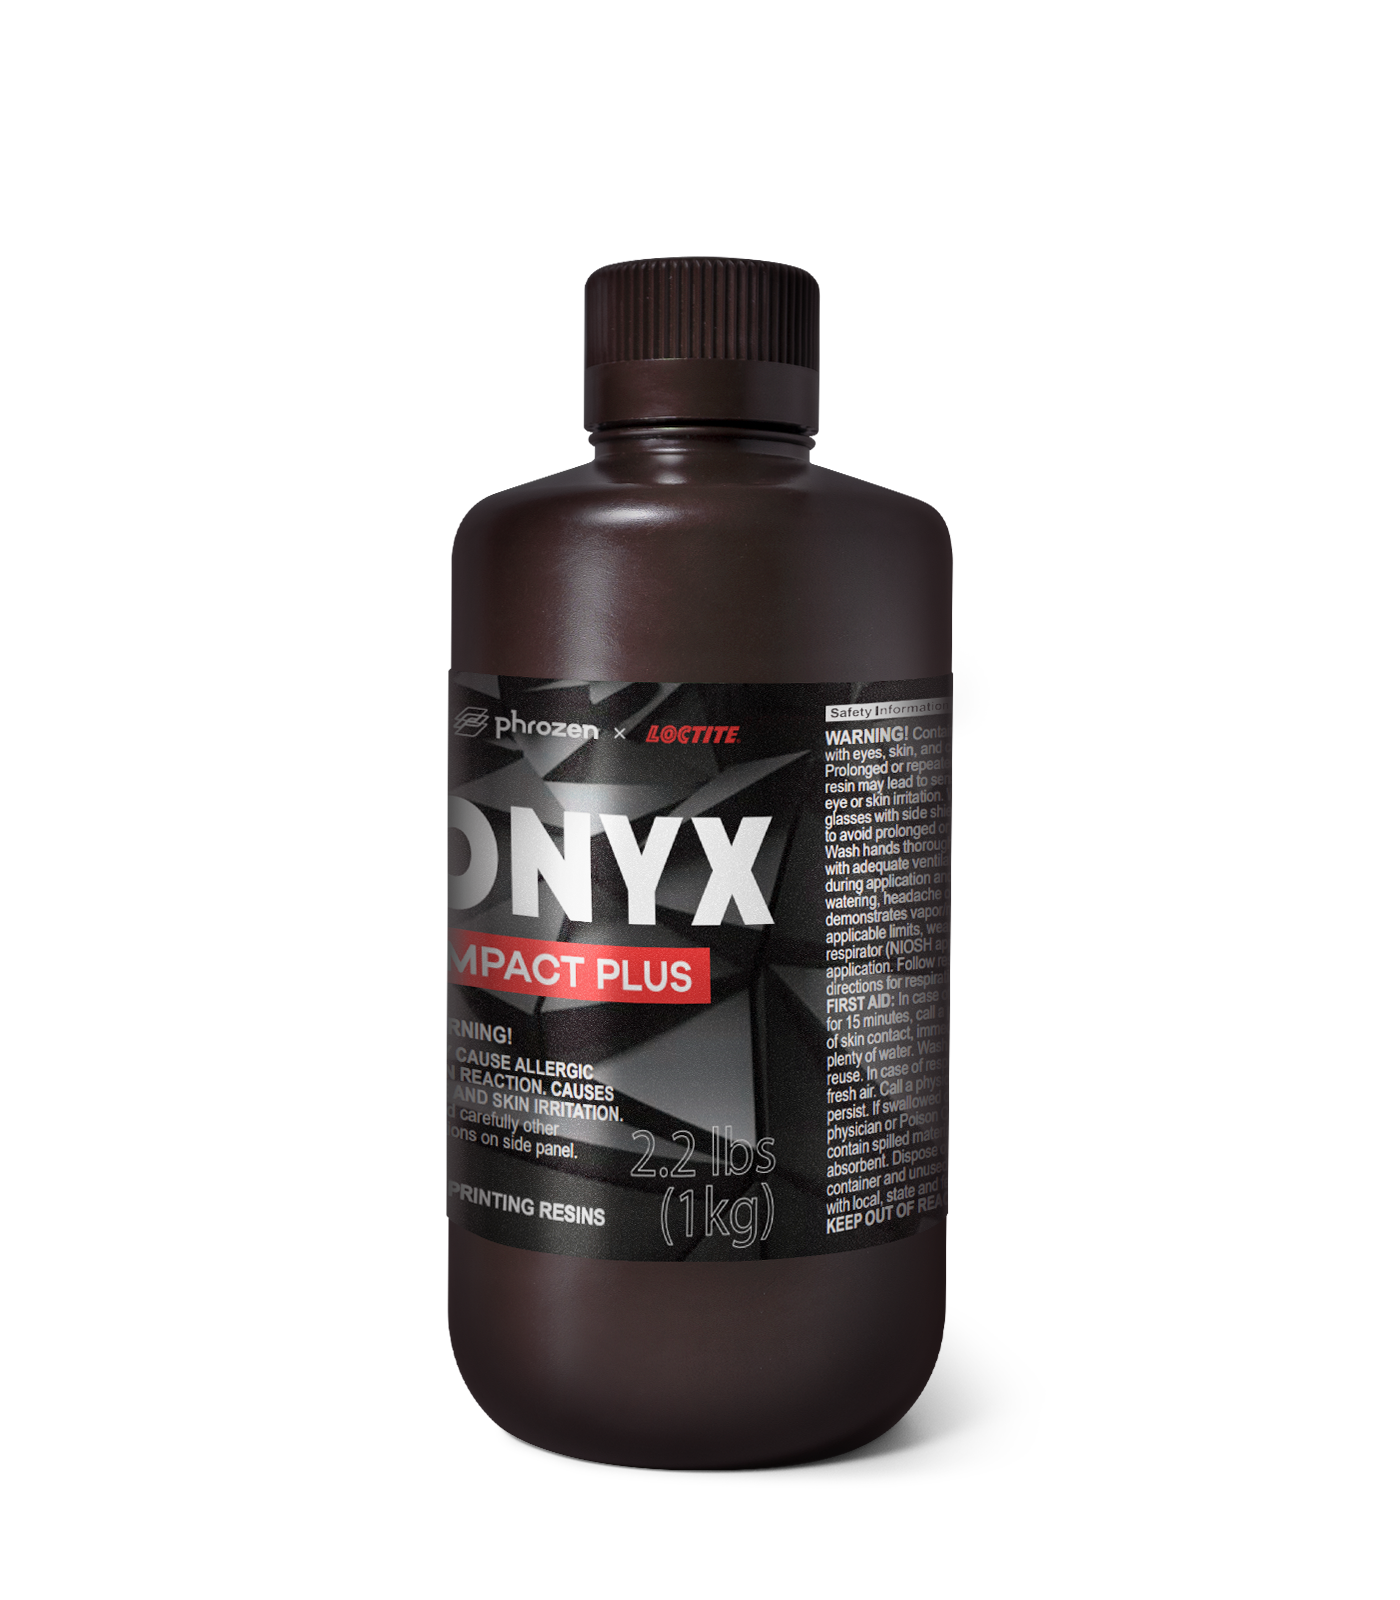 Phrozen ONYX Impact Plus 3D Printing Resin